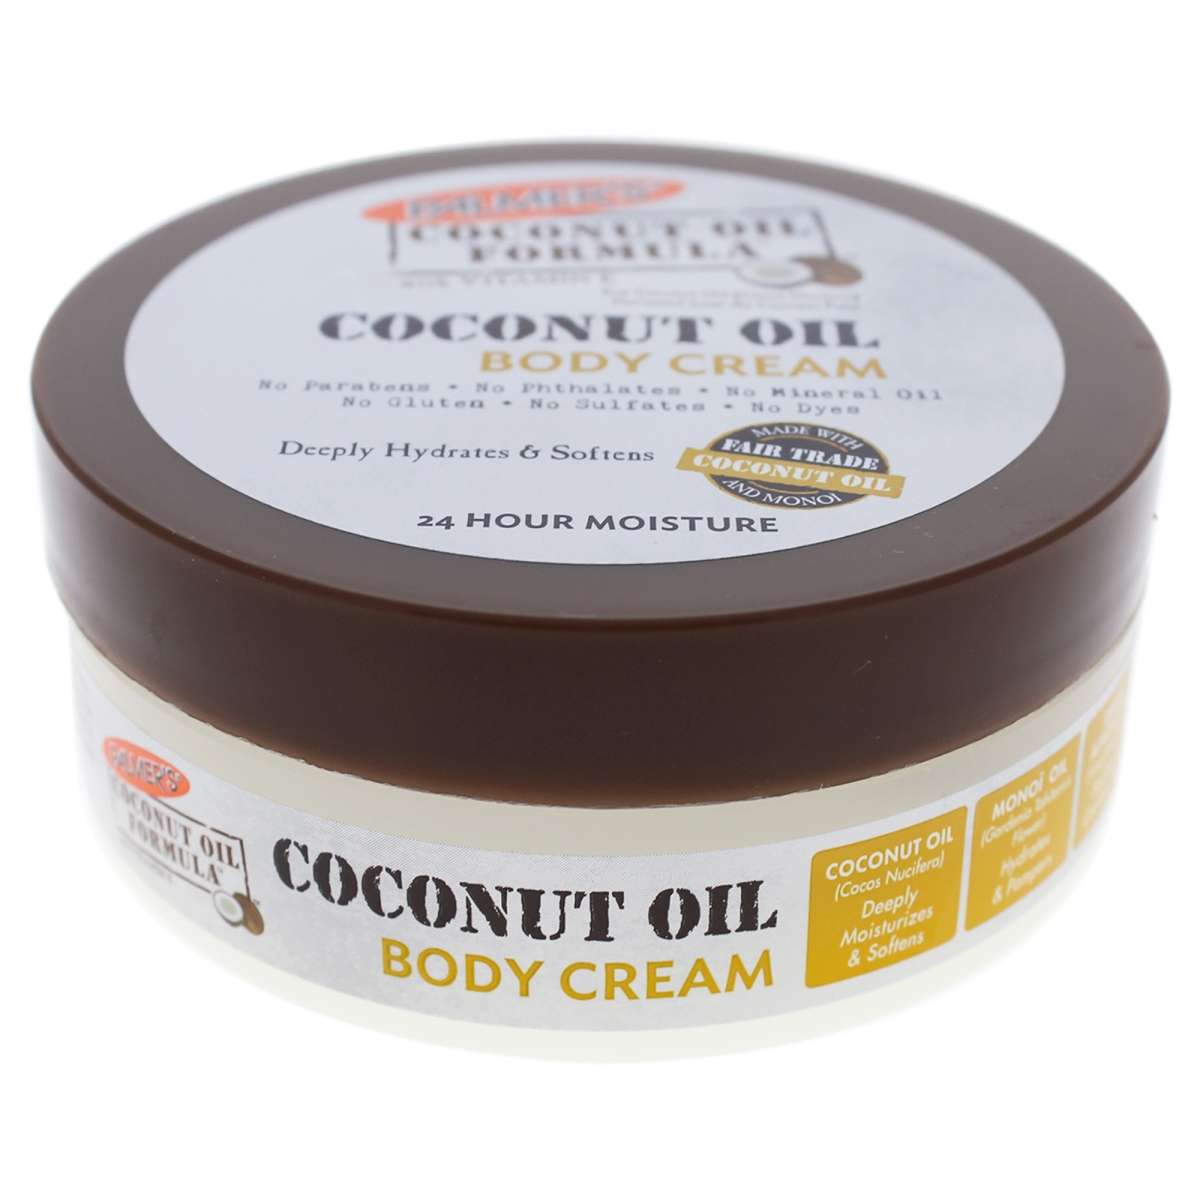 I0088402 Coconut Oil Body Cream For Unisex - 4.4 Oz